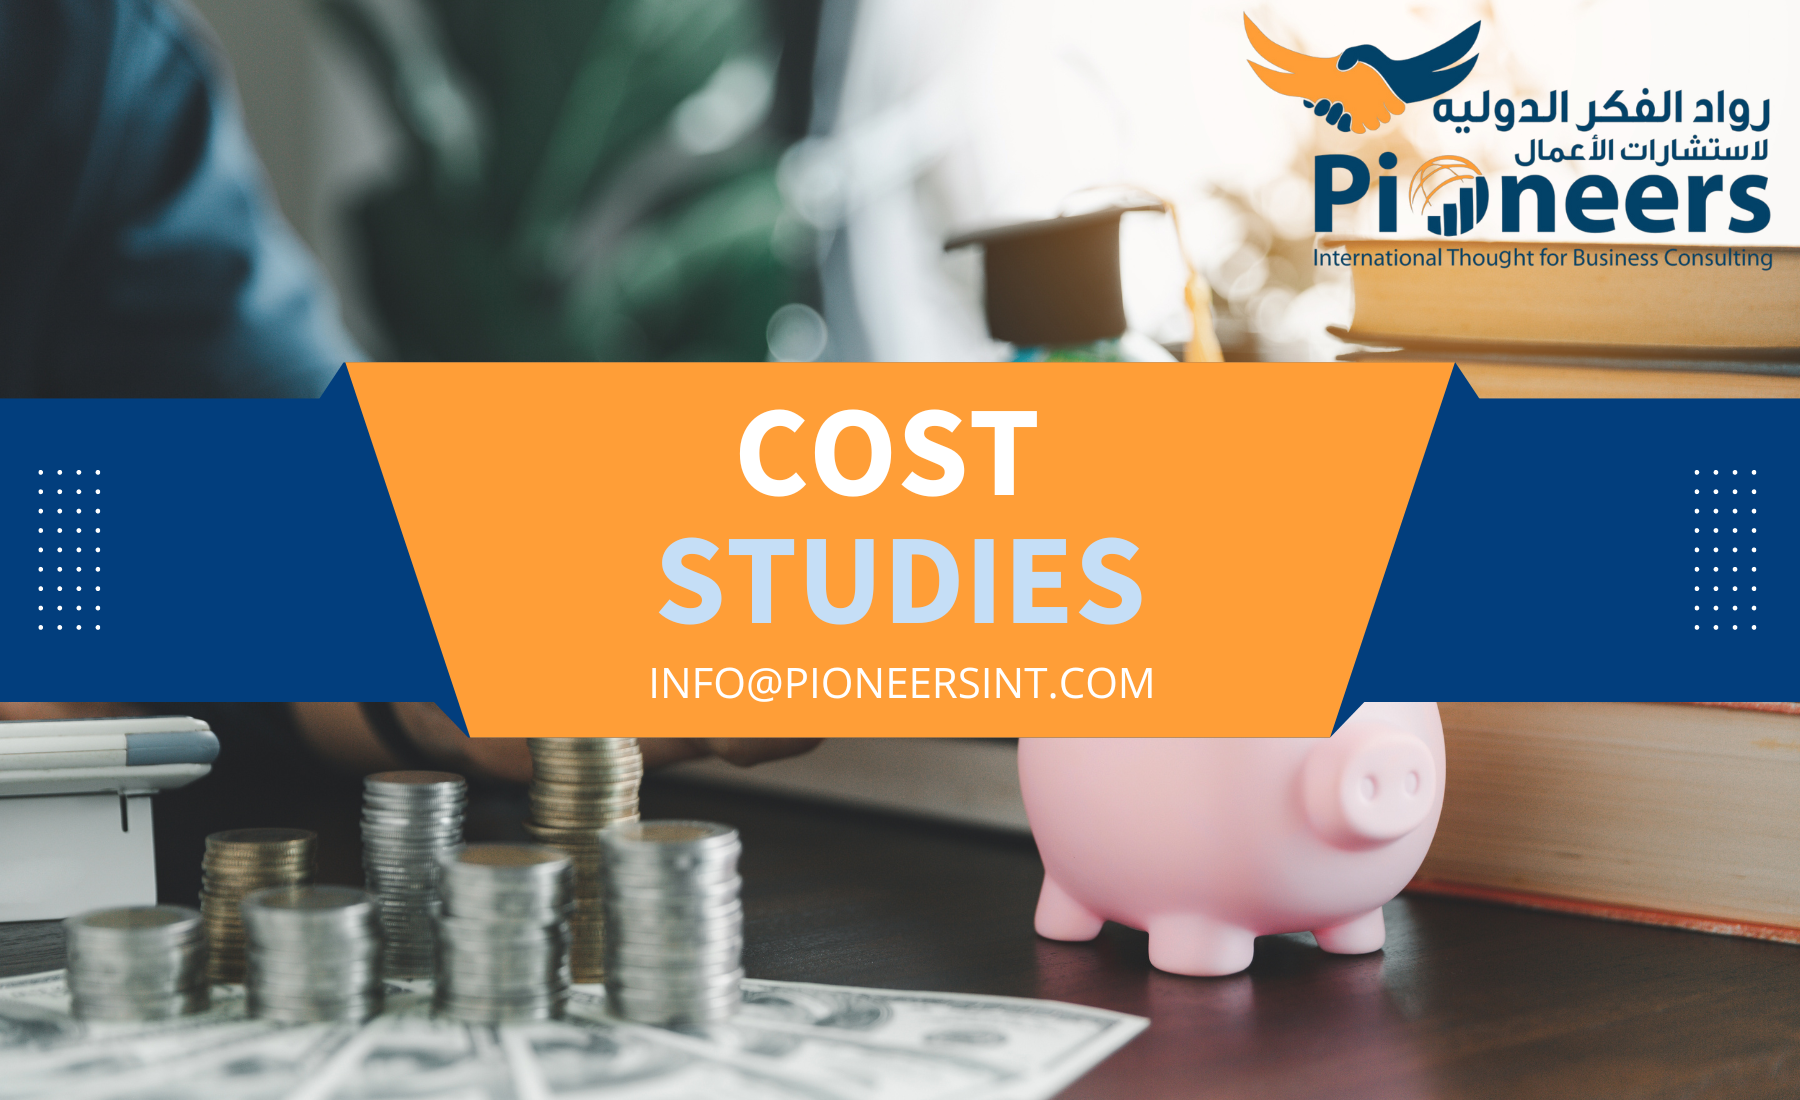 Cost studies